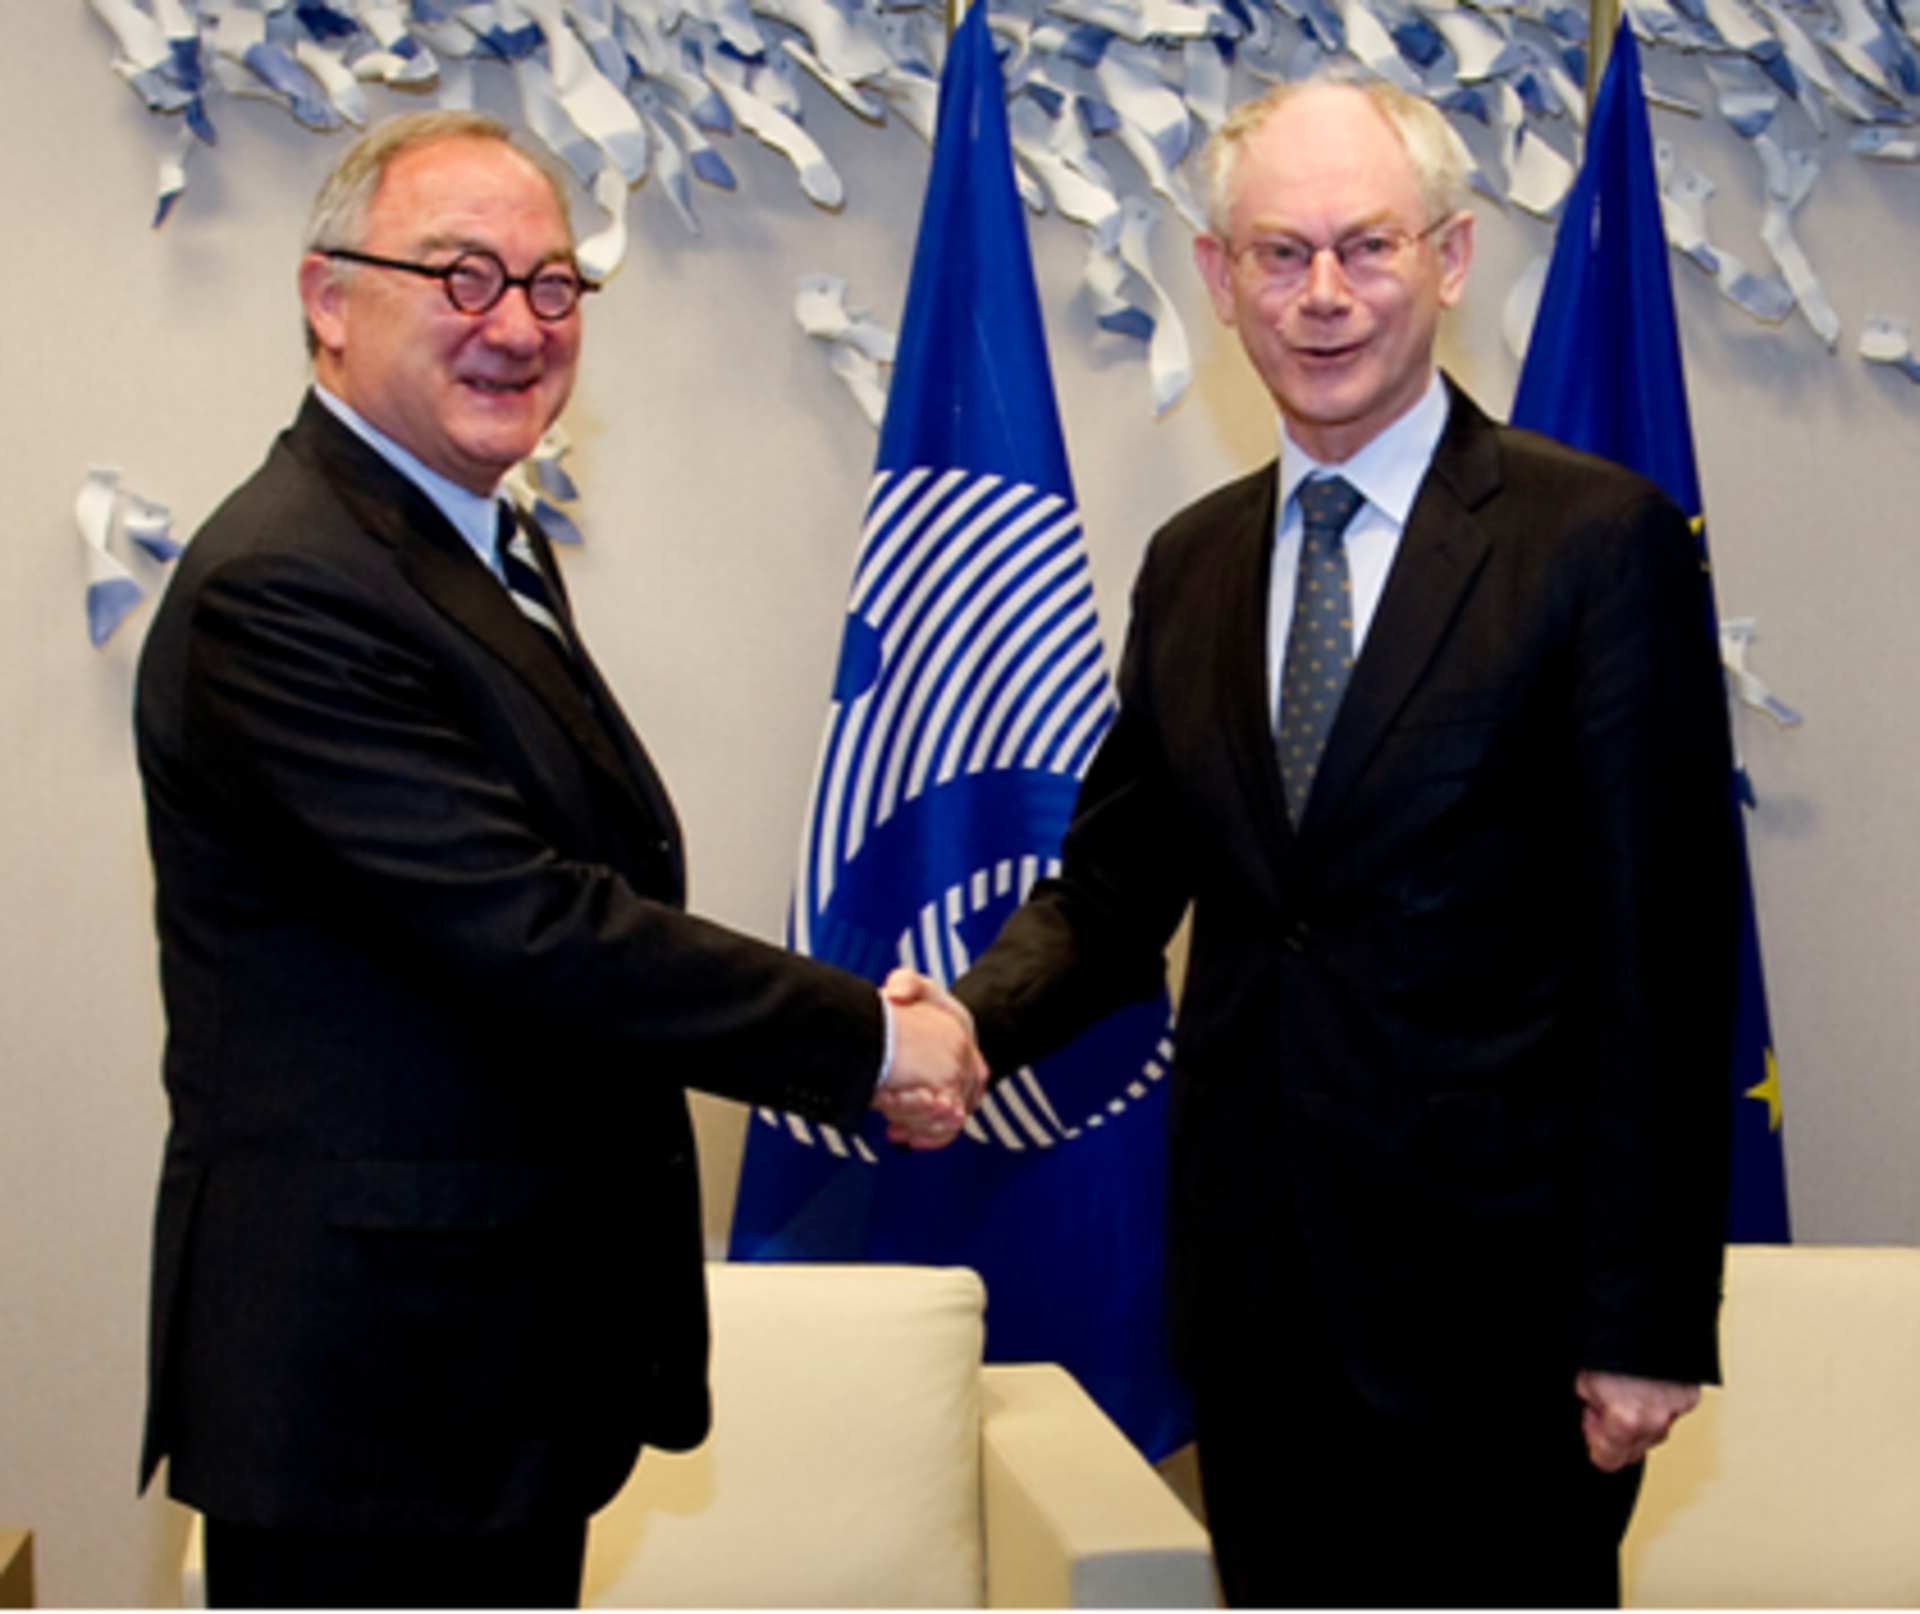 Jean-Jacques Dordain and Herman van Rompuy